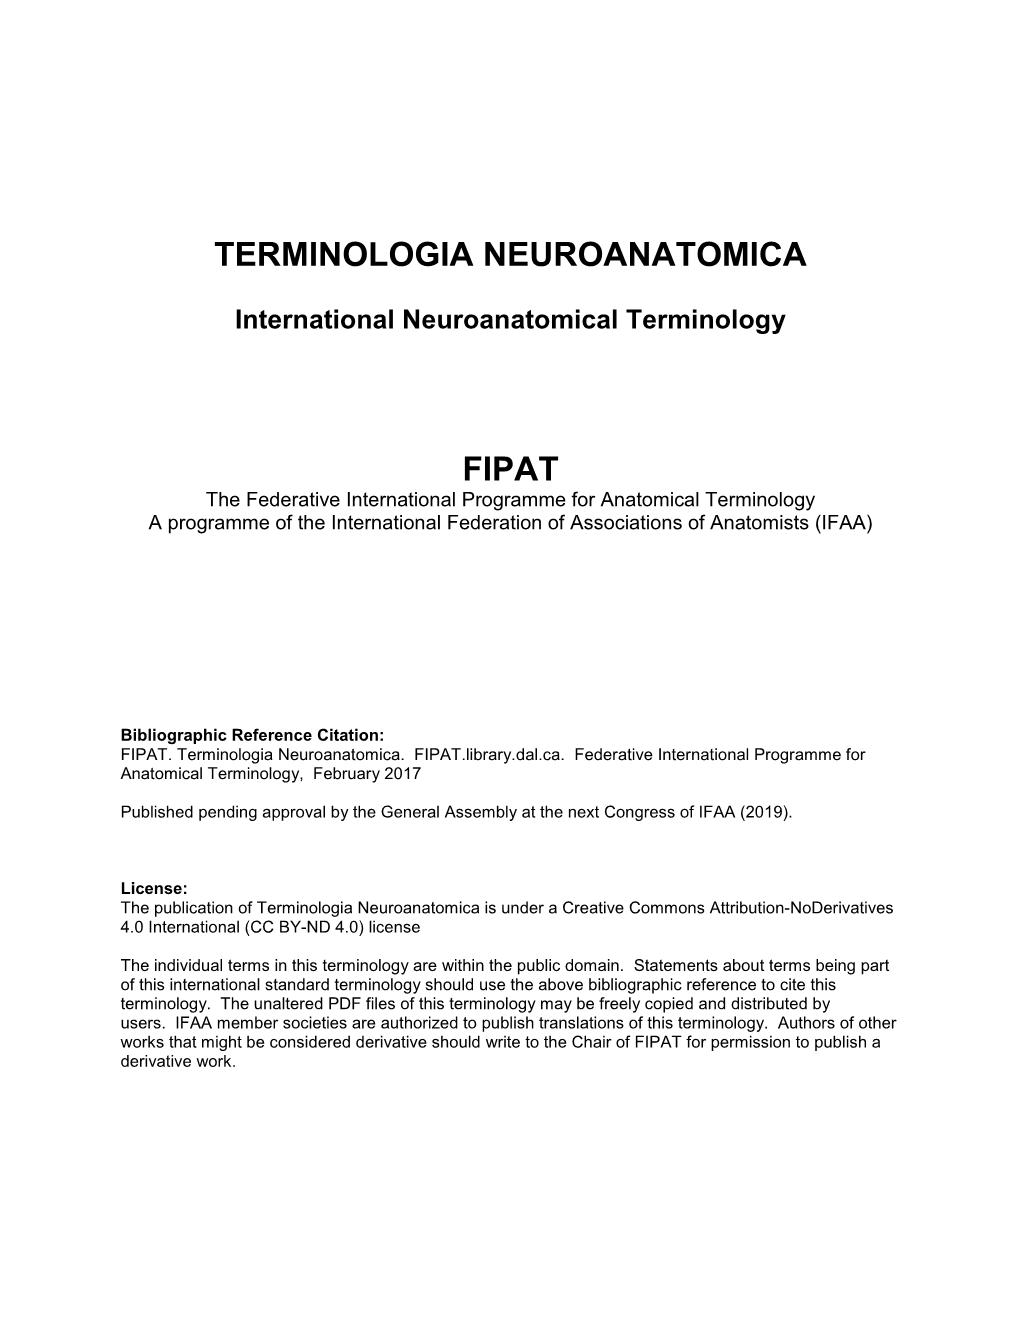 Terminologia Neuroanatomica Fipat